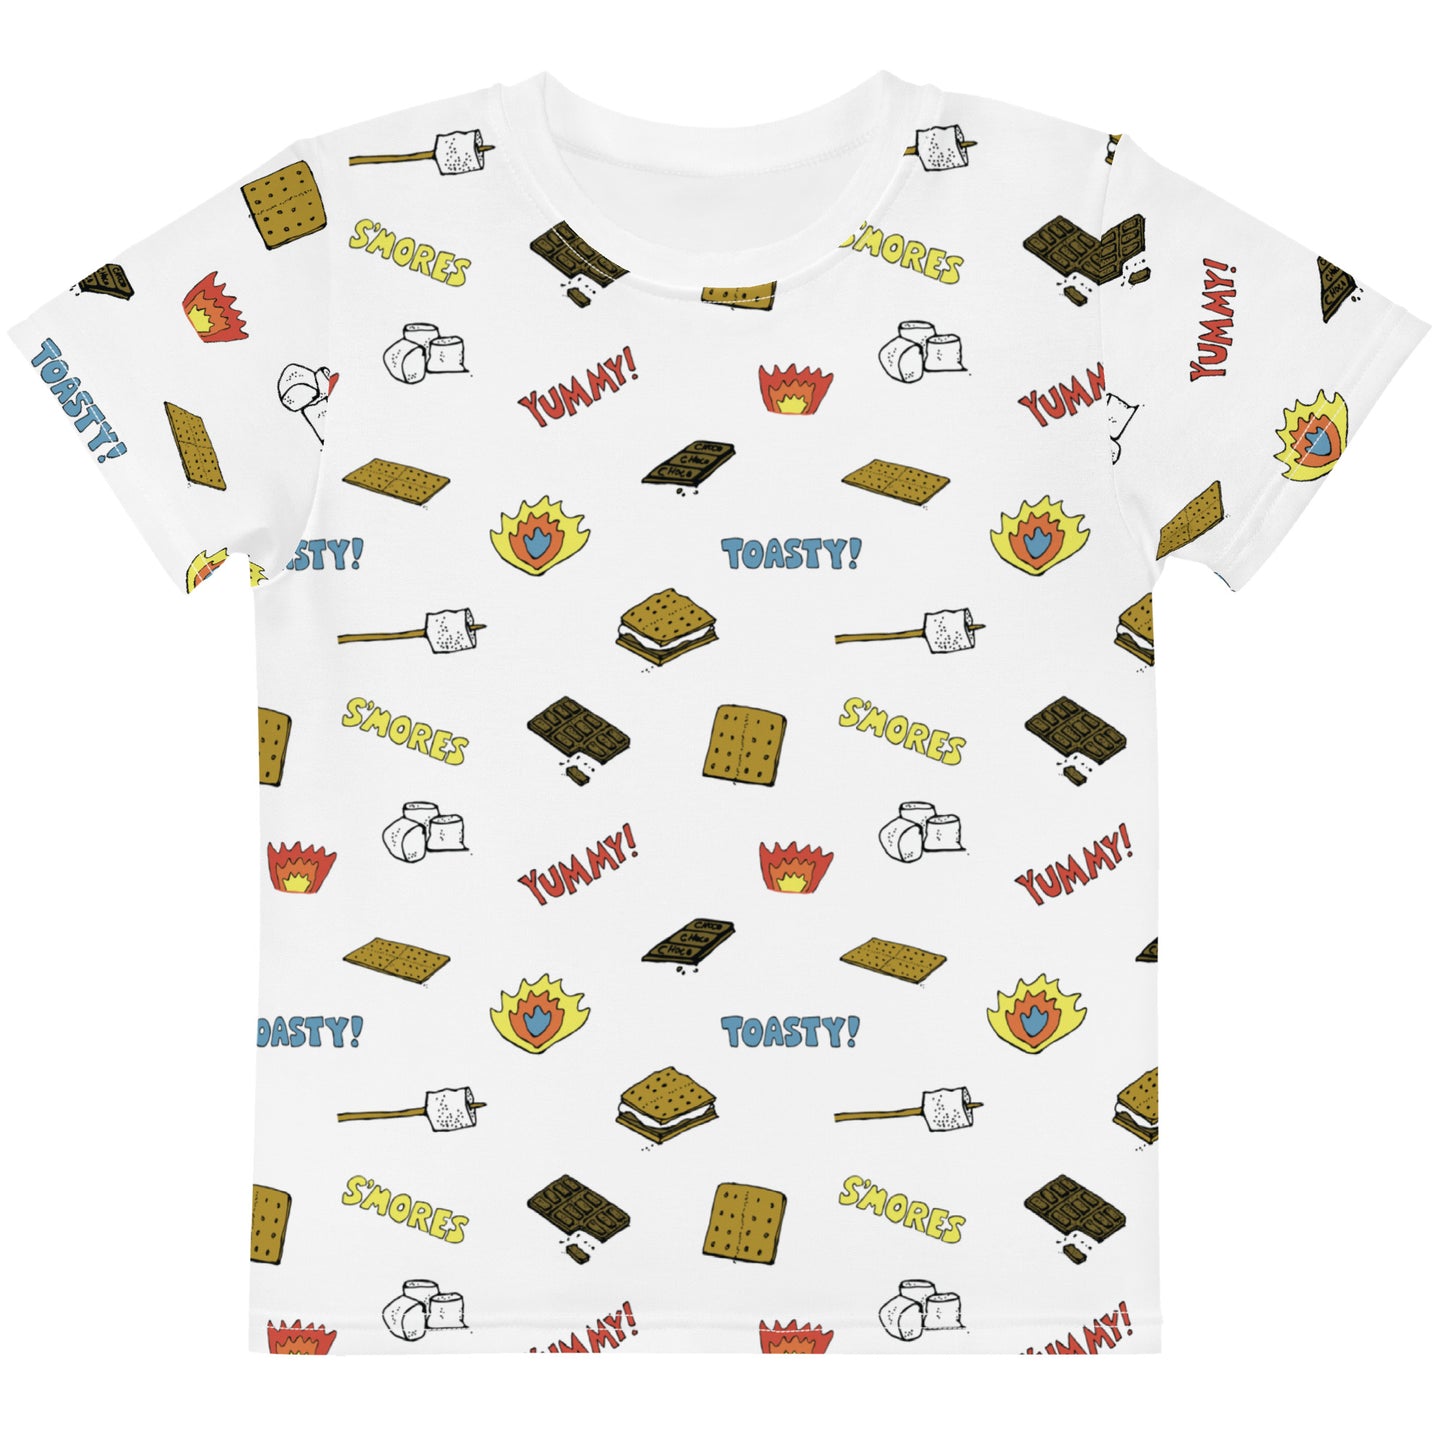 S'mores Theme Crewneck Shirt for Kids | Campfire Smores All Over Print T-shirt for Boys & Girls